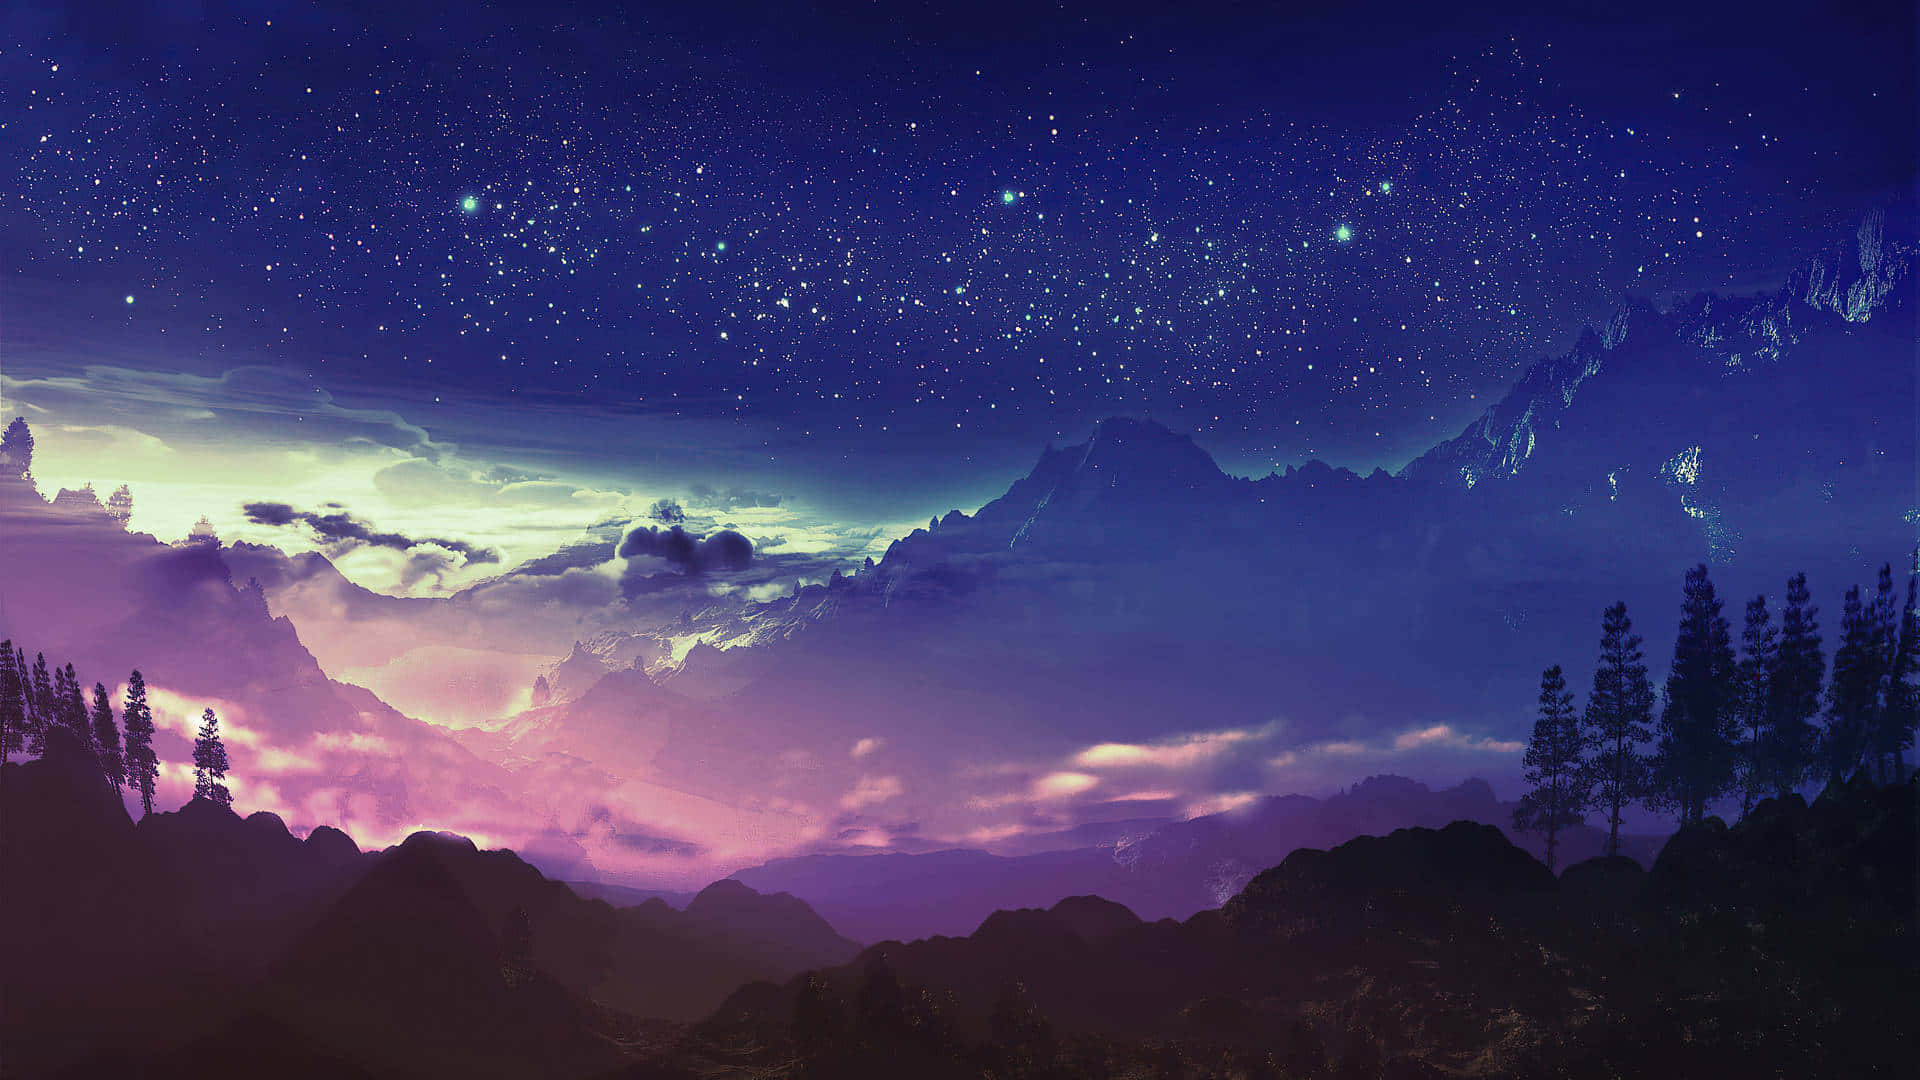 A Serene Aesthetic Night Sky